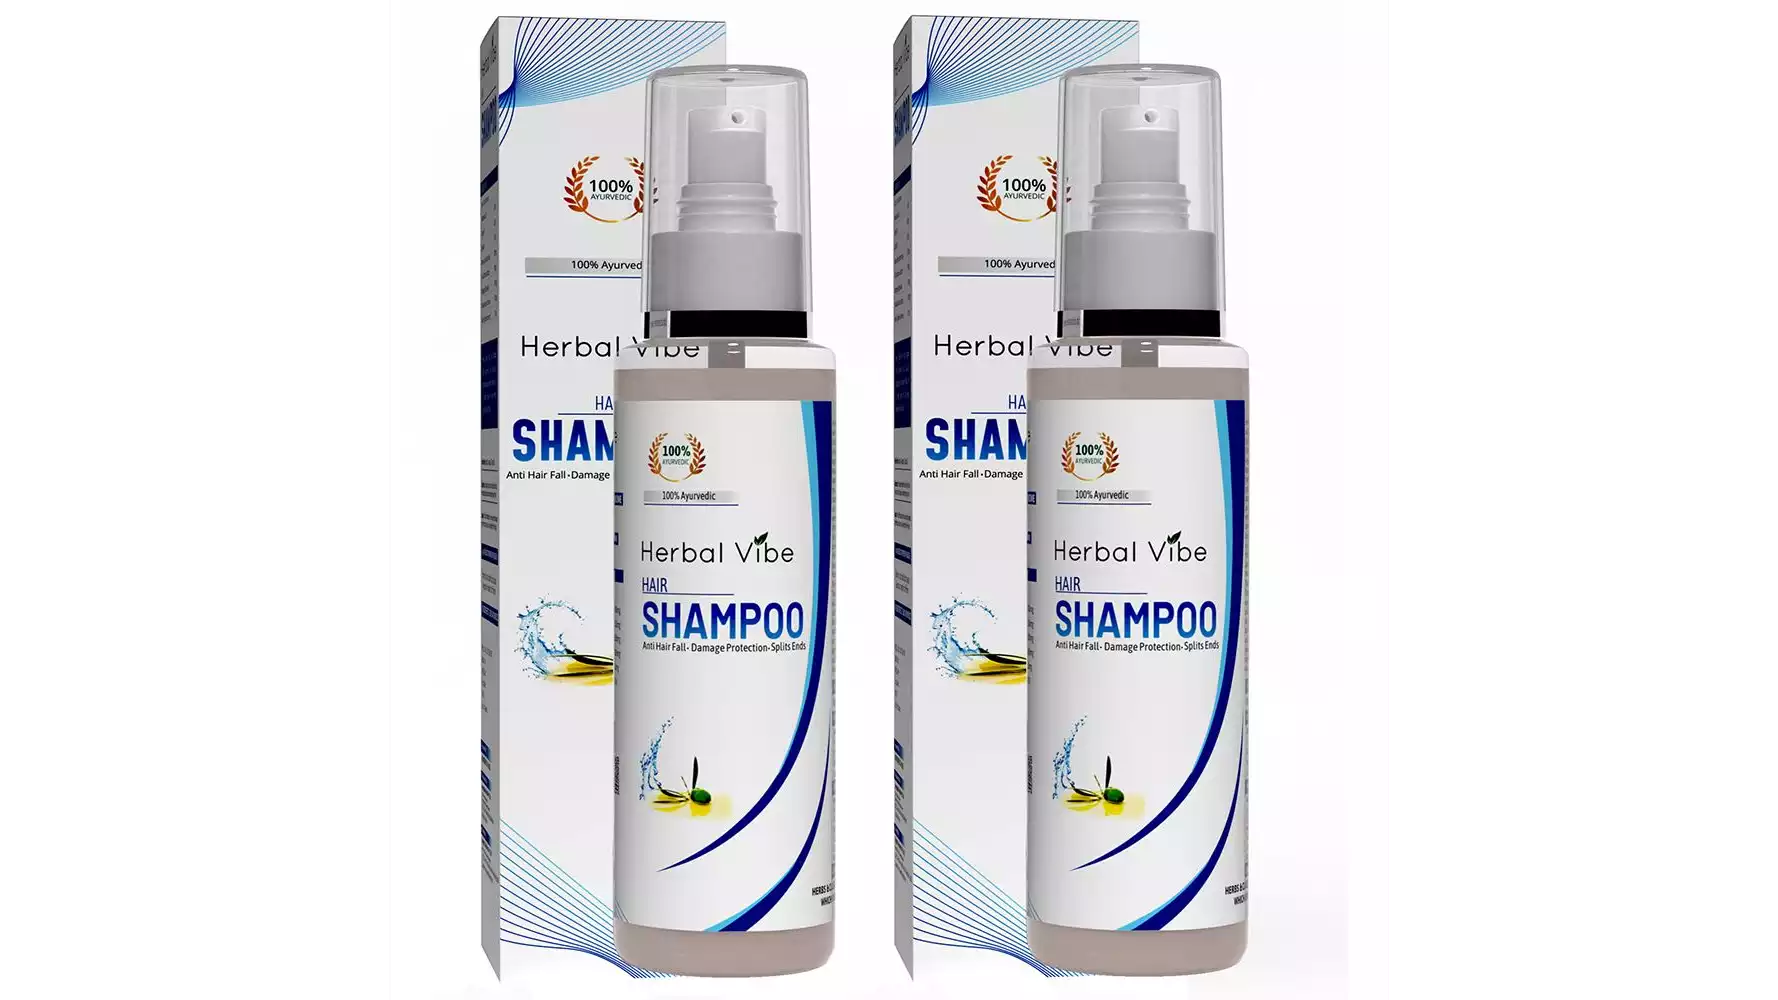 Herbal Vibe Shampoo Hair Anti Hair Fall Shampoo (100ml, Pack of 2)